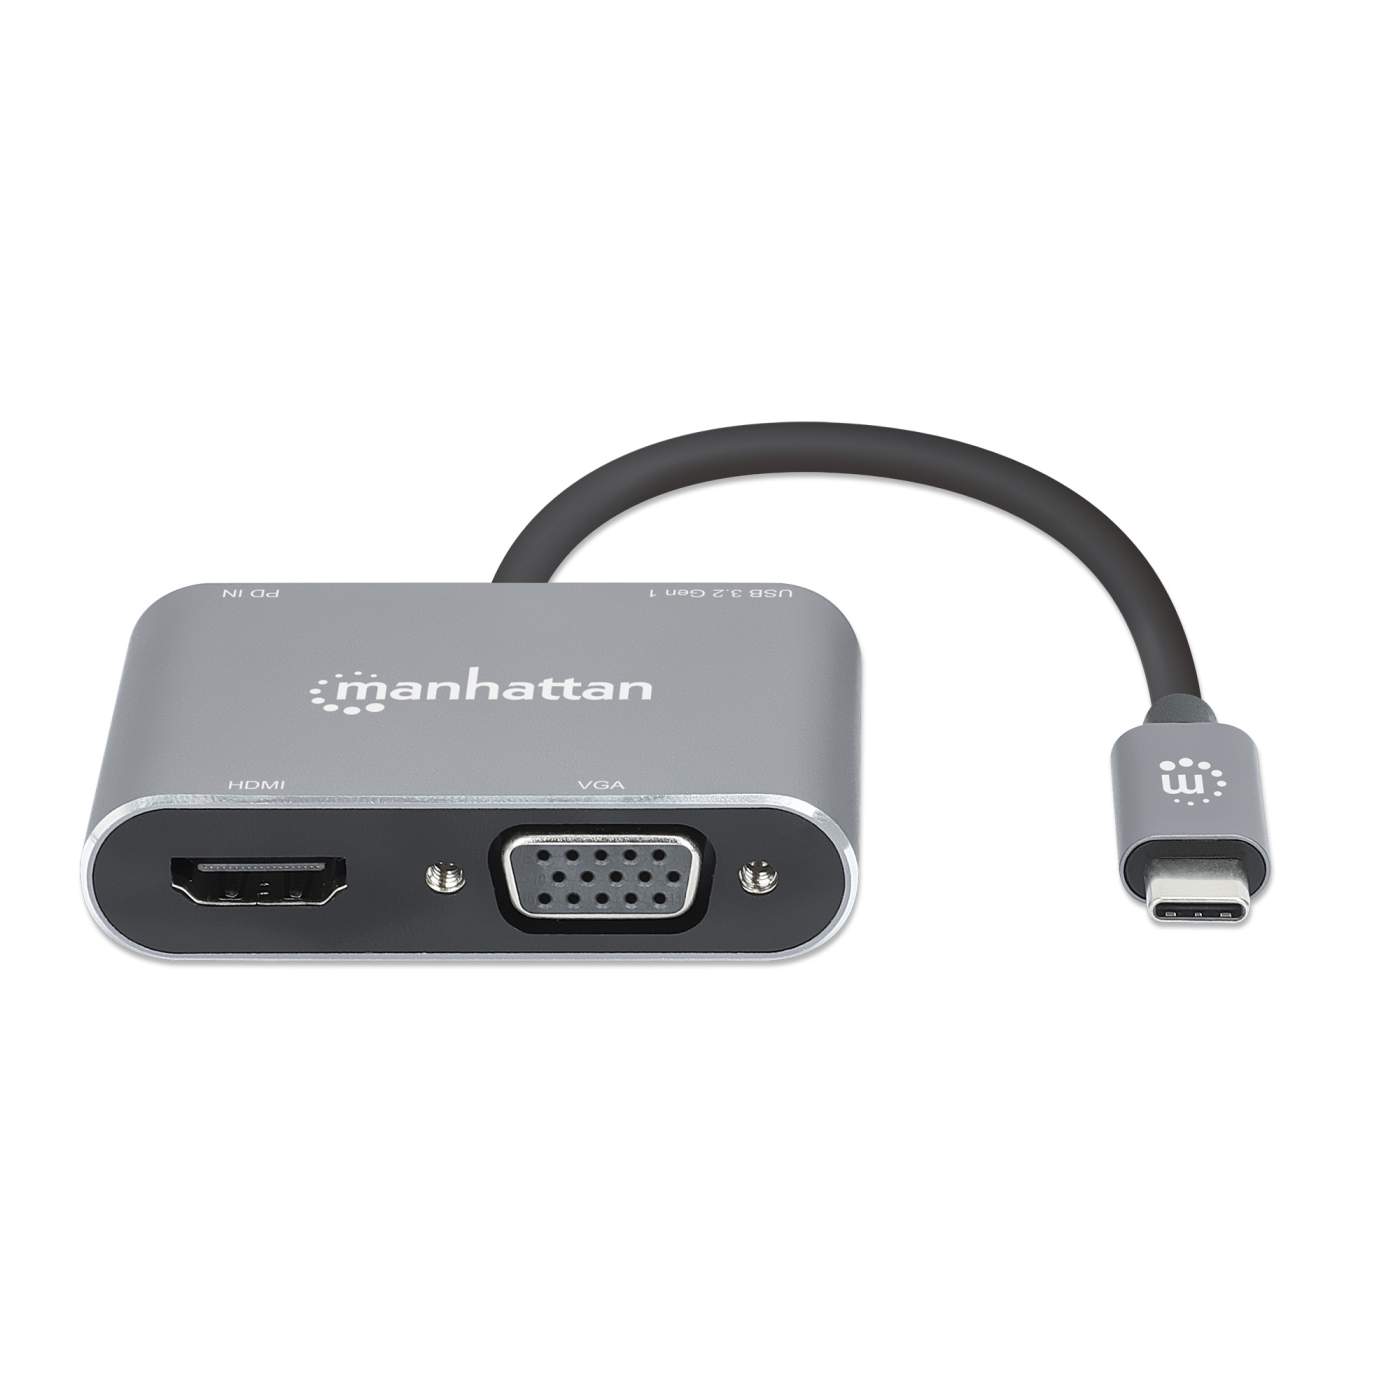 Manhattan Convertidor de VGA y USB a HDMI (152426)